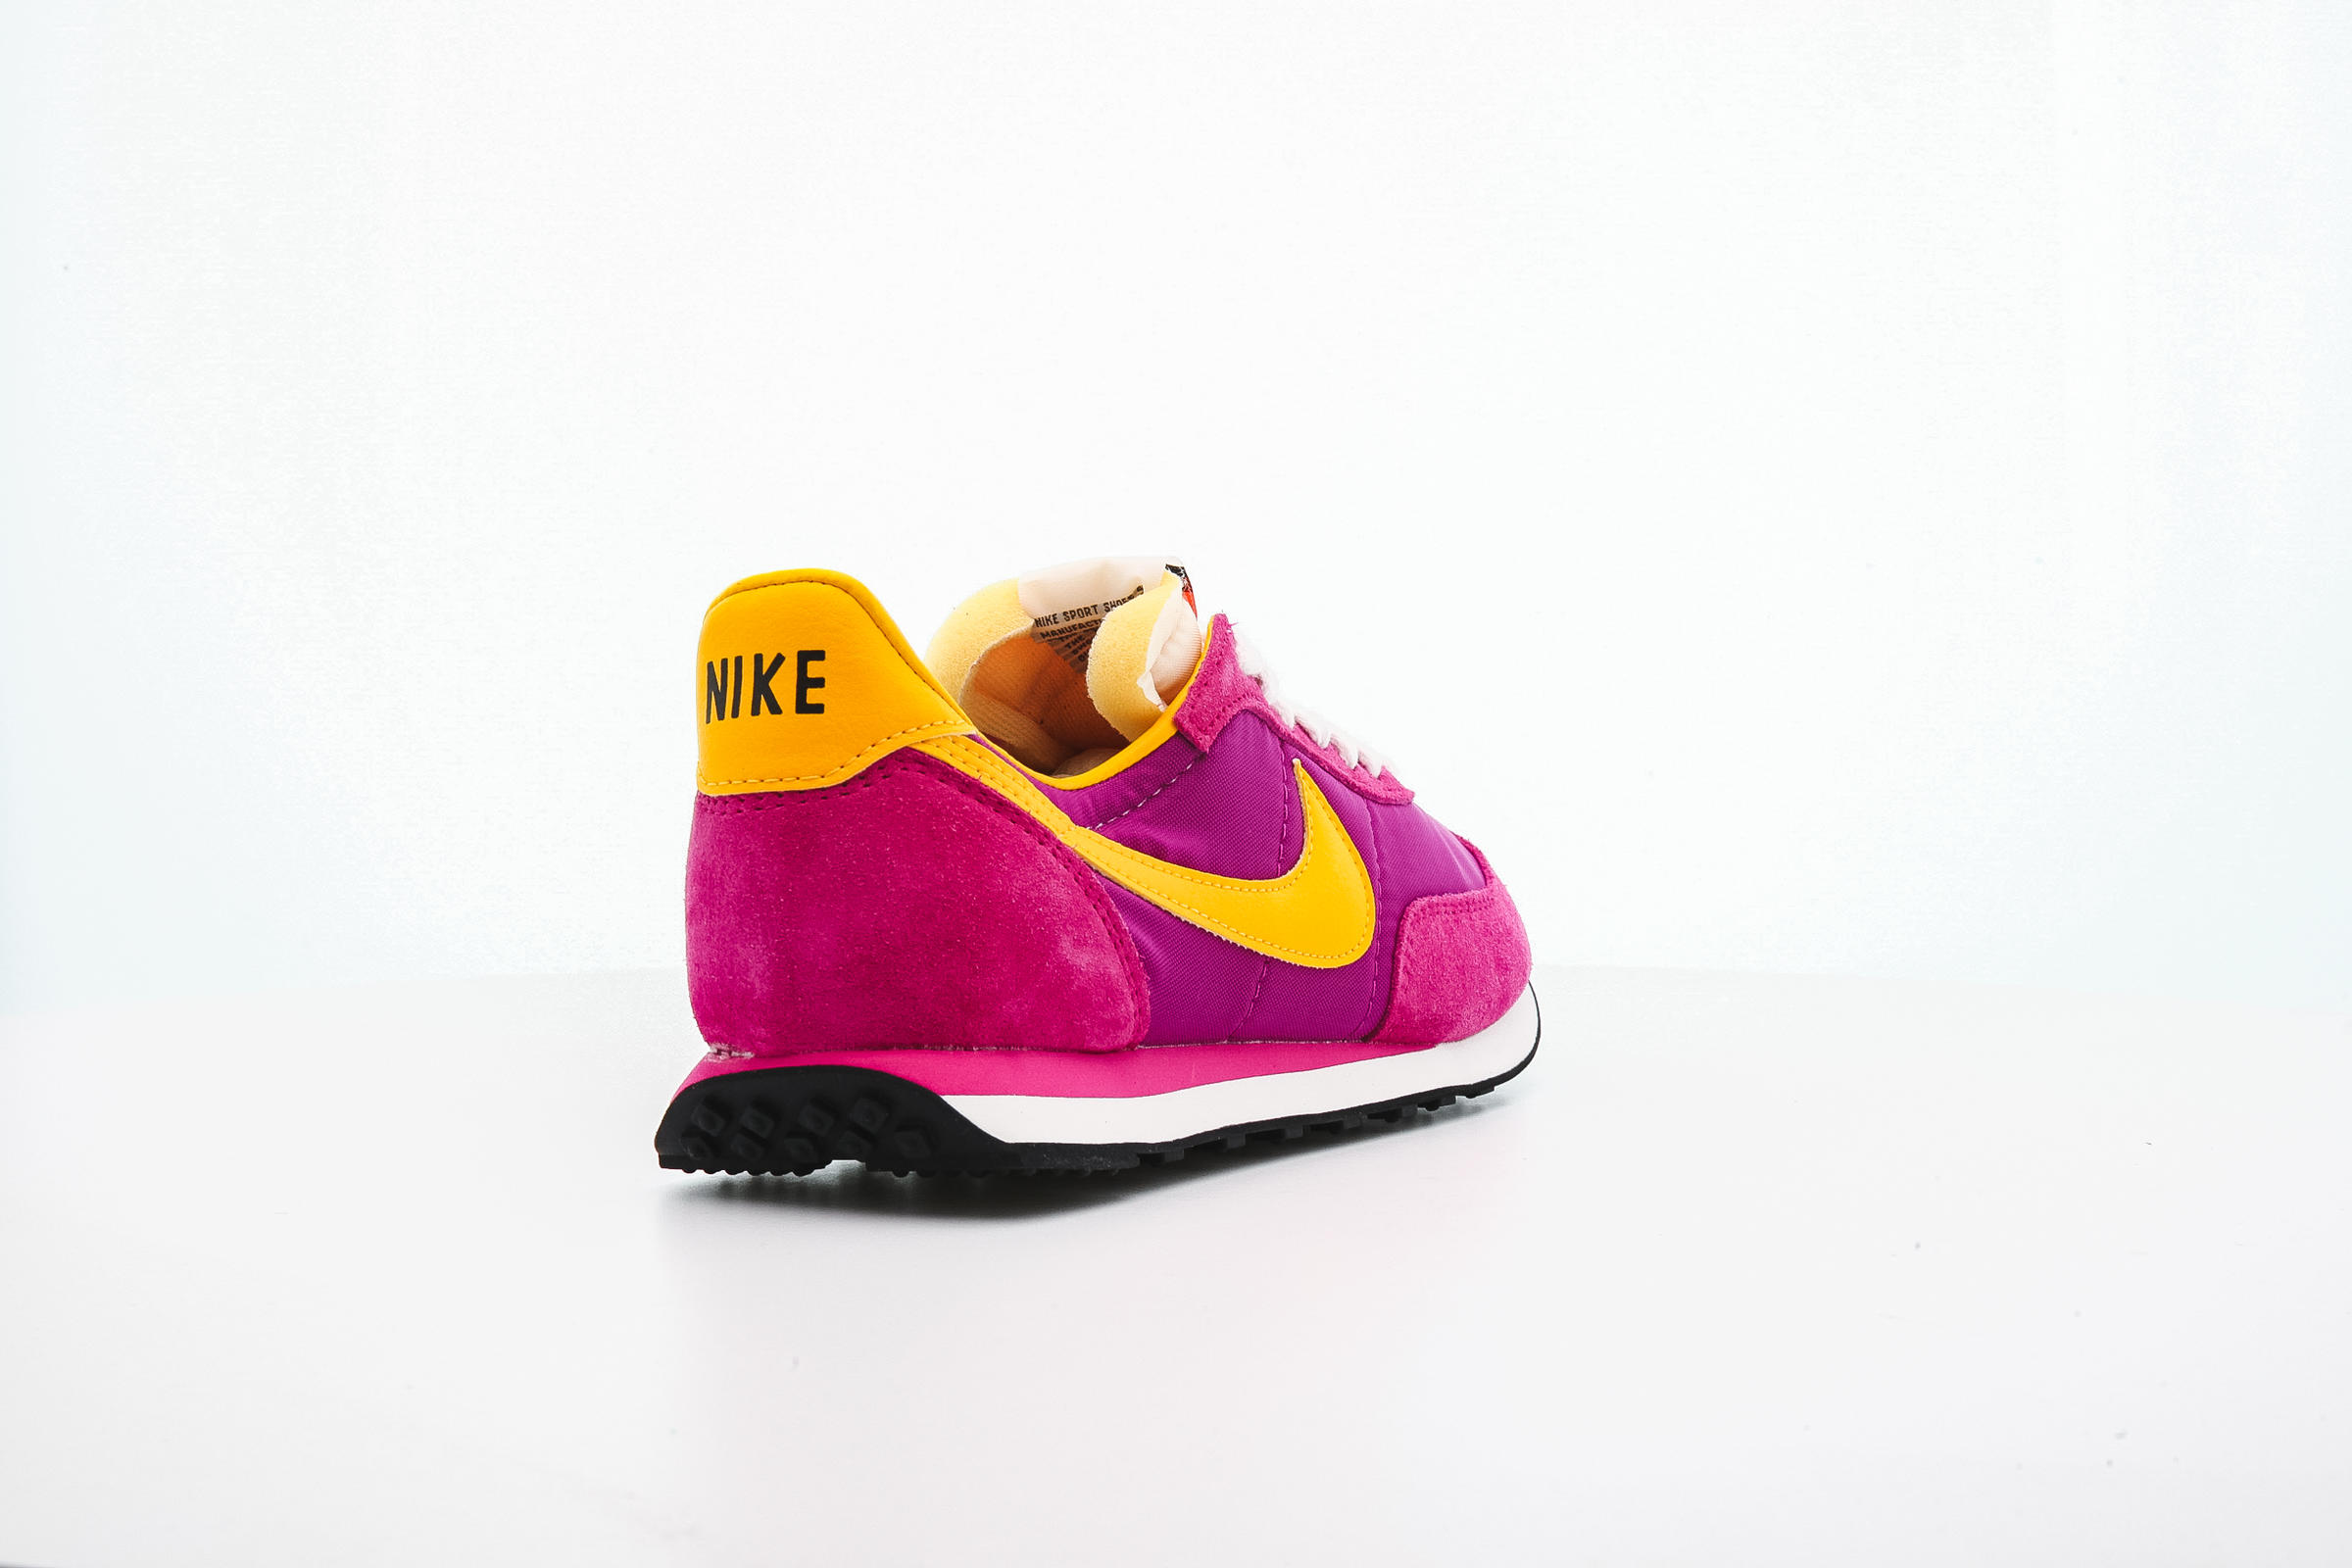 Nike WAFFLE TRAINER 2 SP "FIREBERRY"